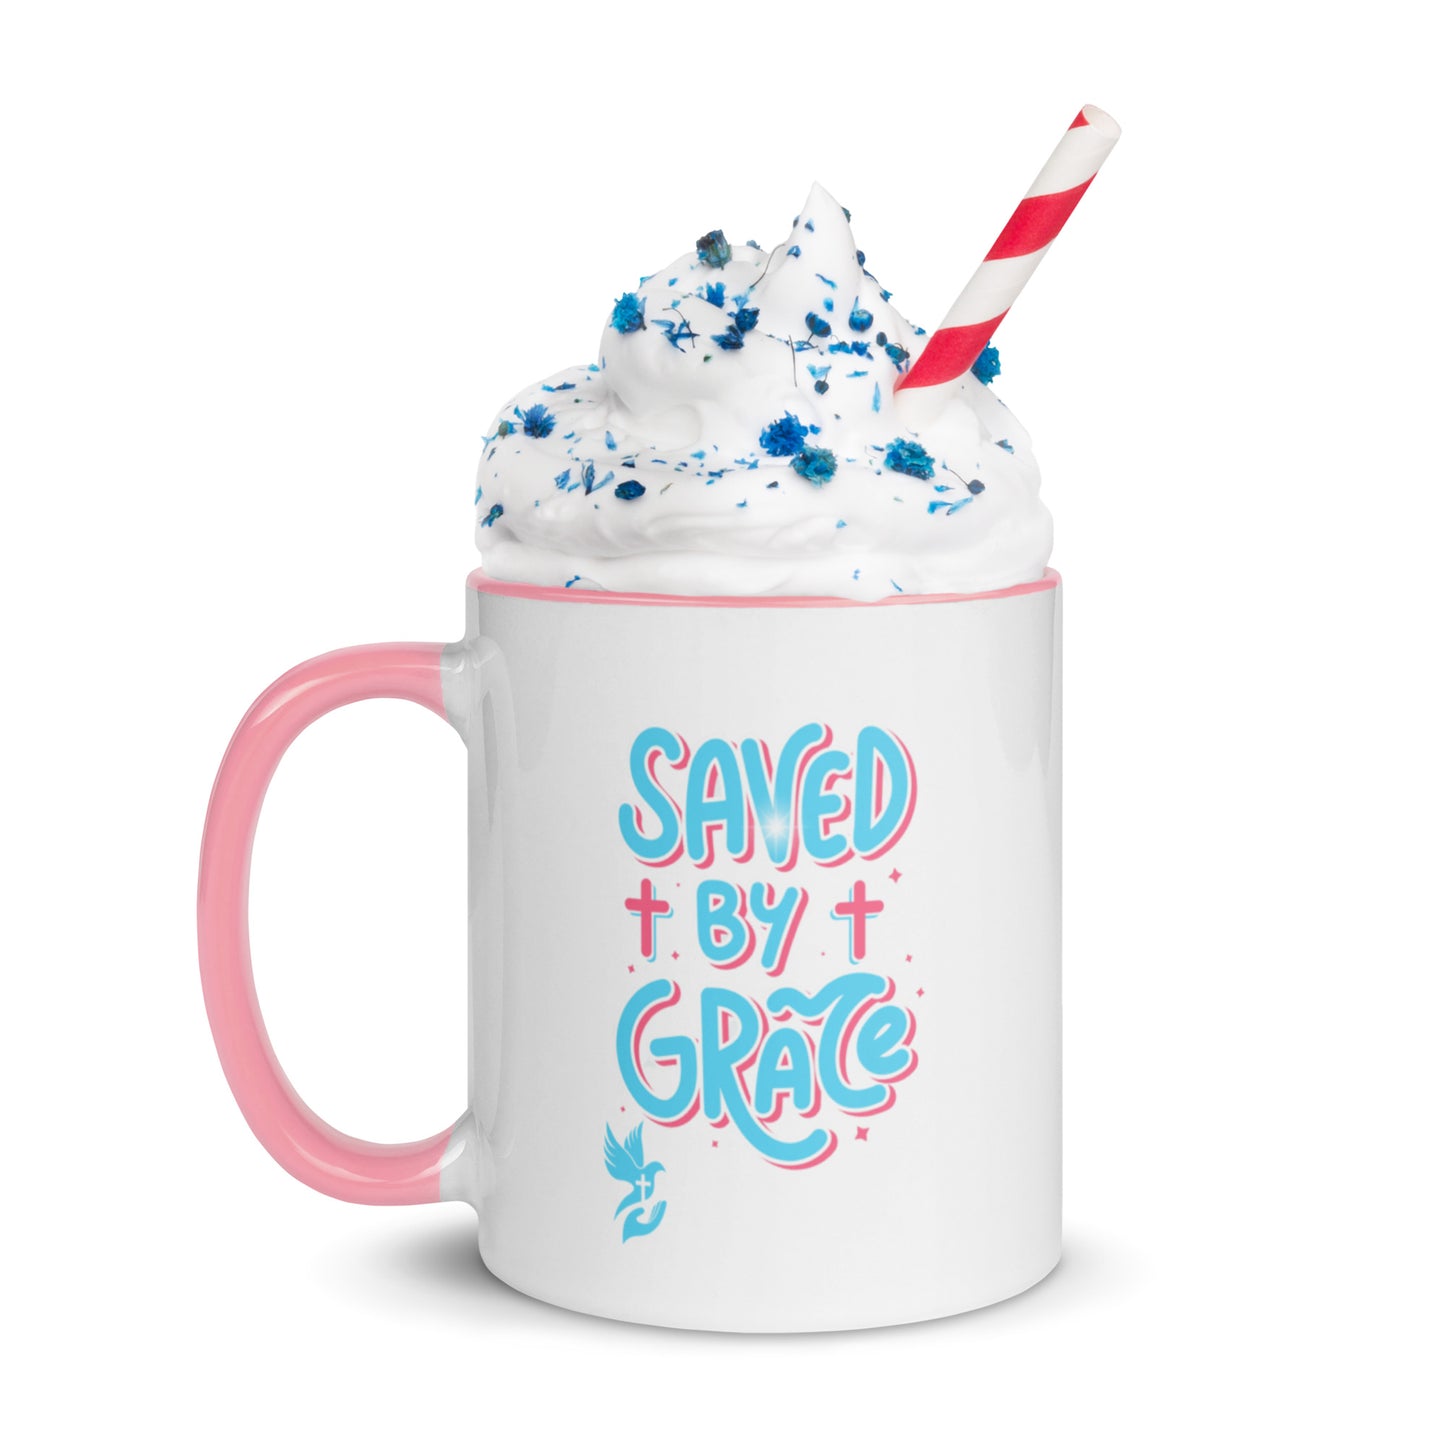 Saved By Grace Mug with Color Inside, Faith-based Mugs, Religious Mugs, Christian Mugs, Mugs with Words, Mugs, Colorful Mugs, Ceramic ware